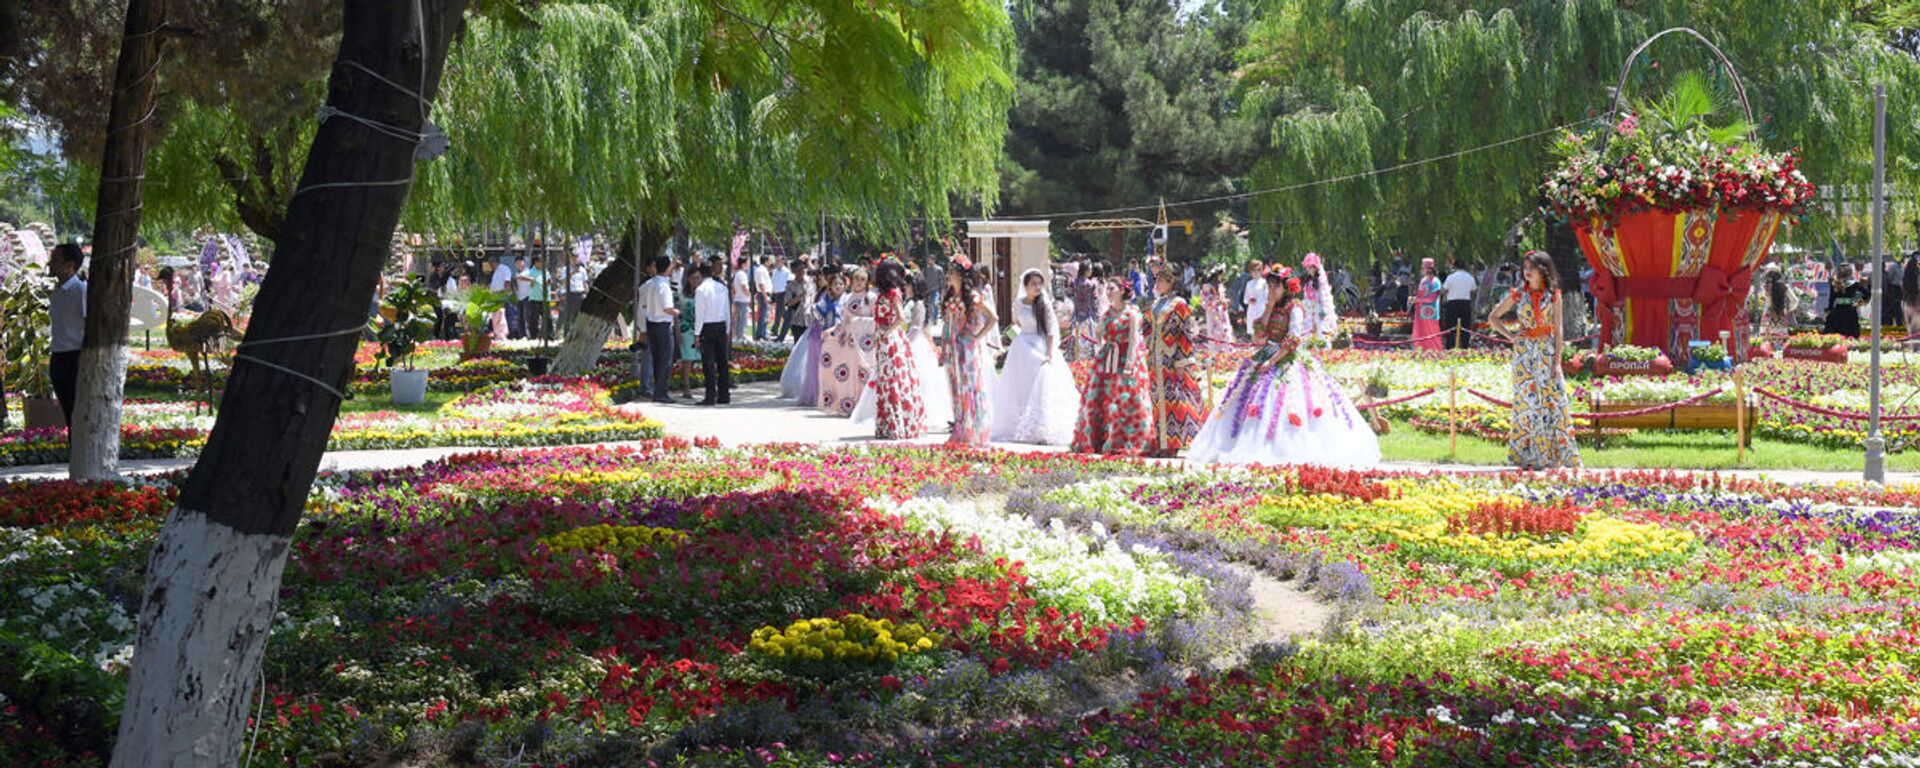 Фестиваль цветов в Намангане - Sputnik Узбекистан, 1920, 06.05.2021